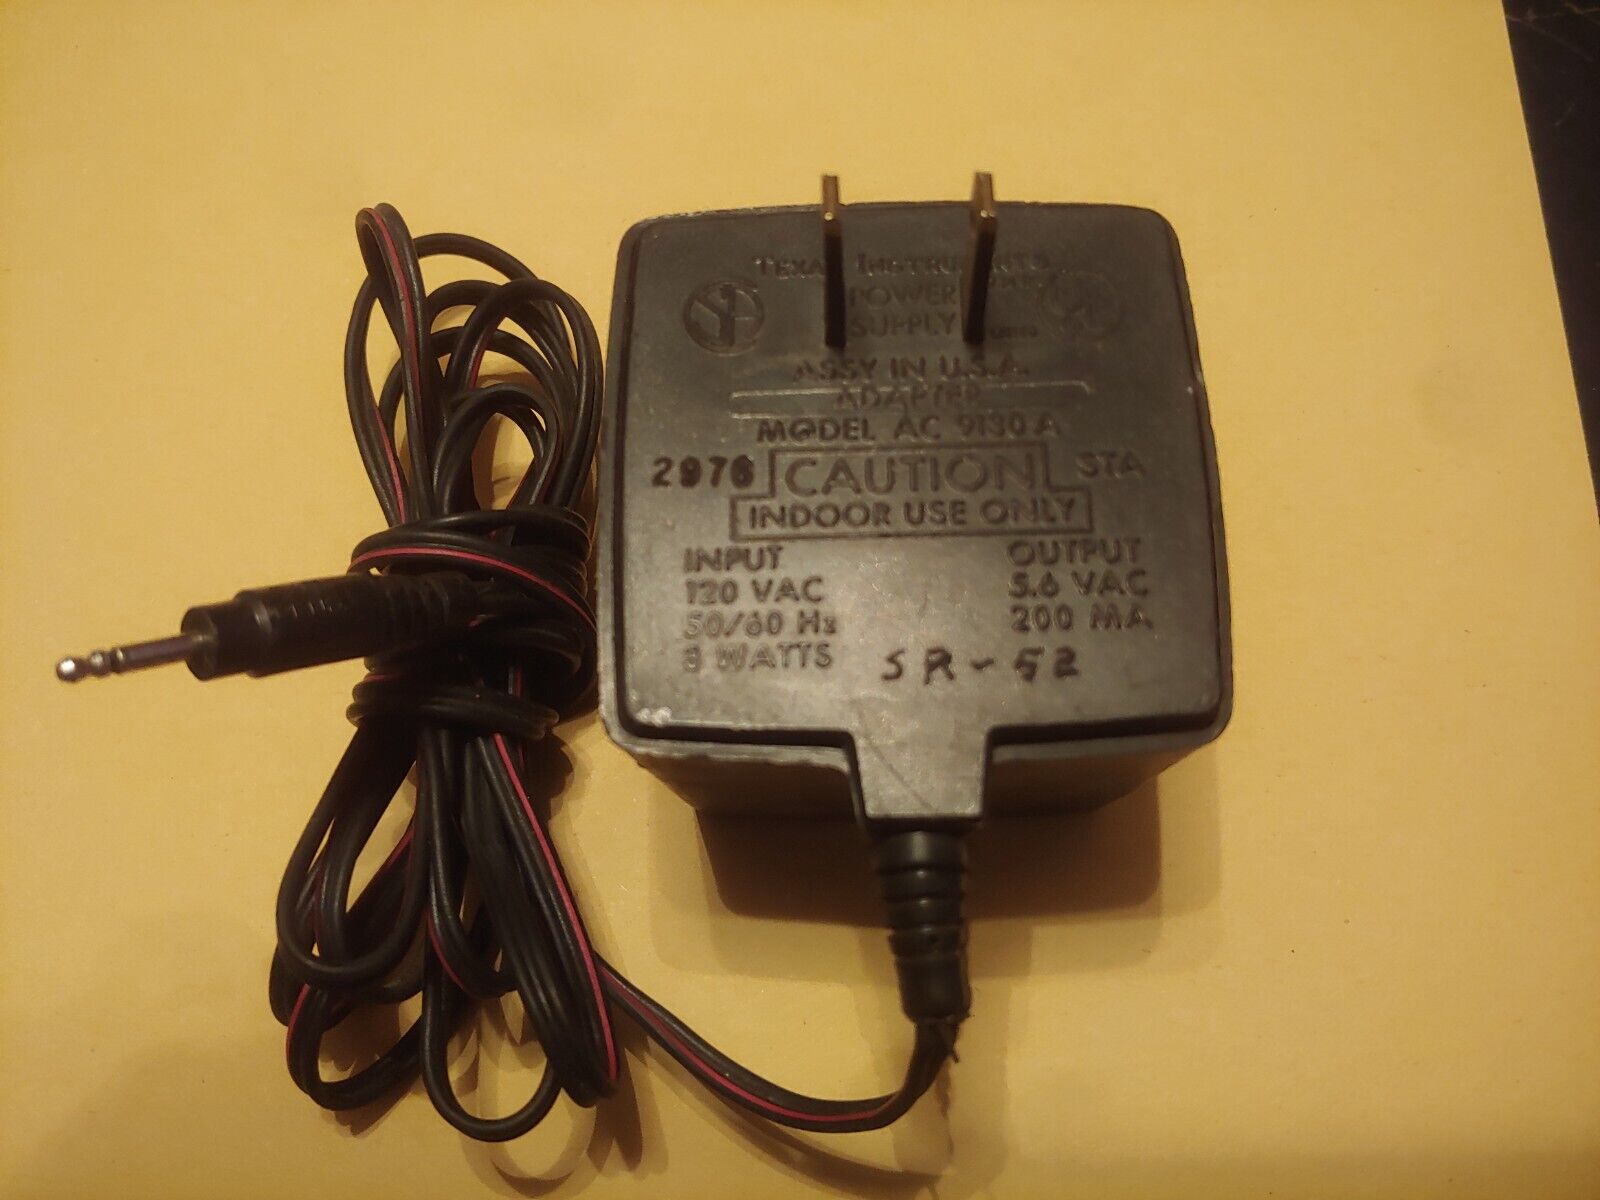 Vintage OEM Texas Instruments 9130 5.6 VAC Calculator Adapter Charger SR-52 wrks